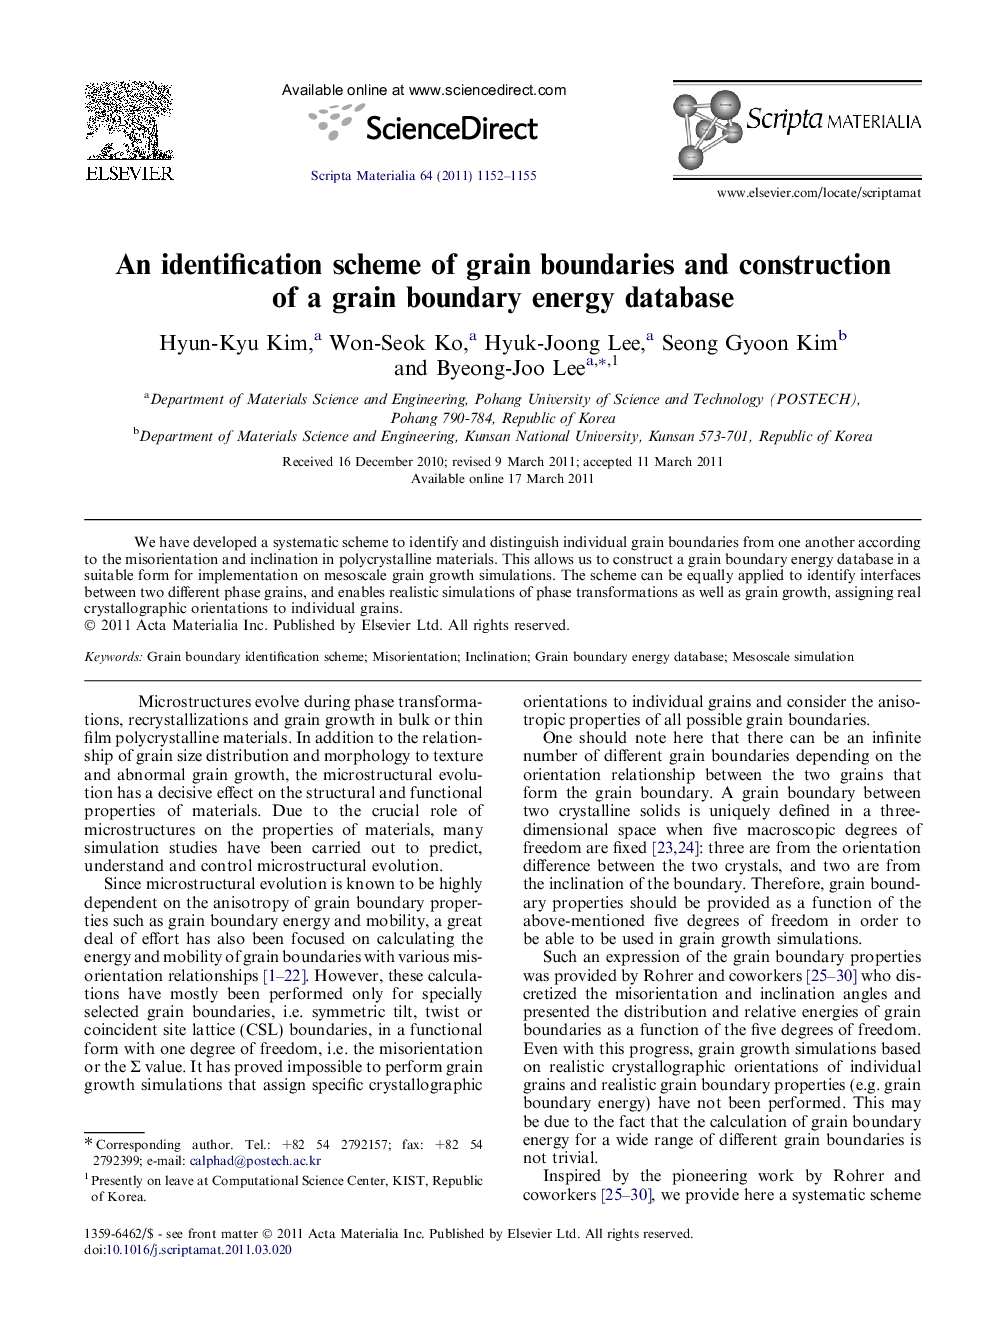 An identification scheme of grain boundaries and construction of a grain boundary energy database